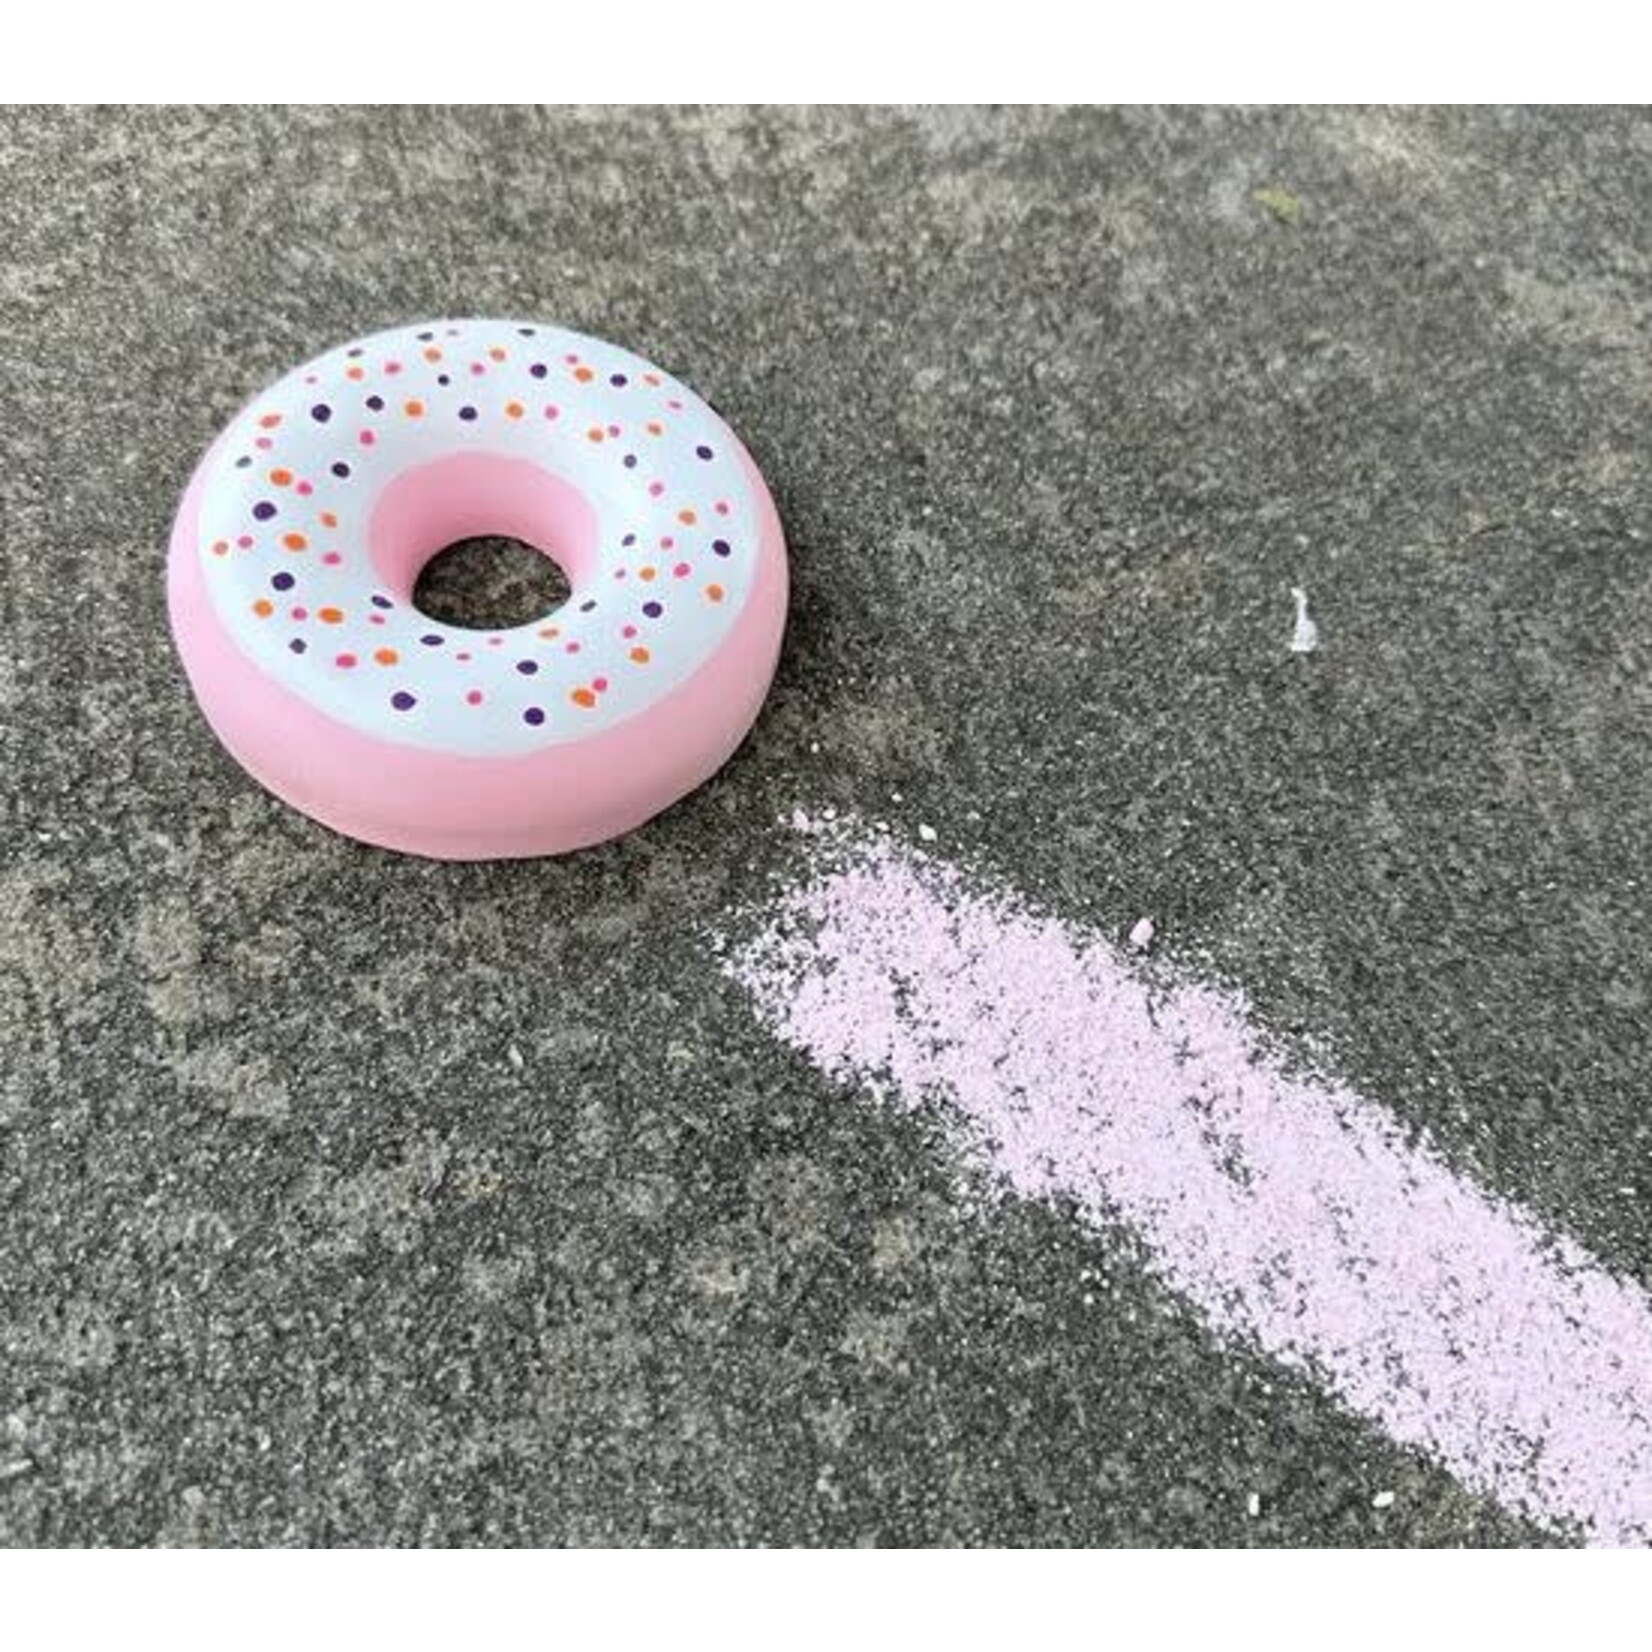 TWEE made for little hands Sprinkle Donut Handmade Sidewalk Chalk